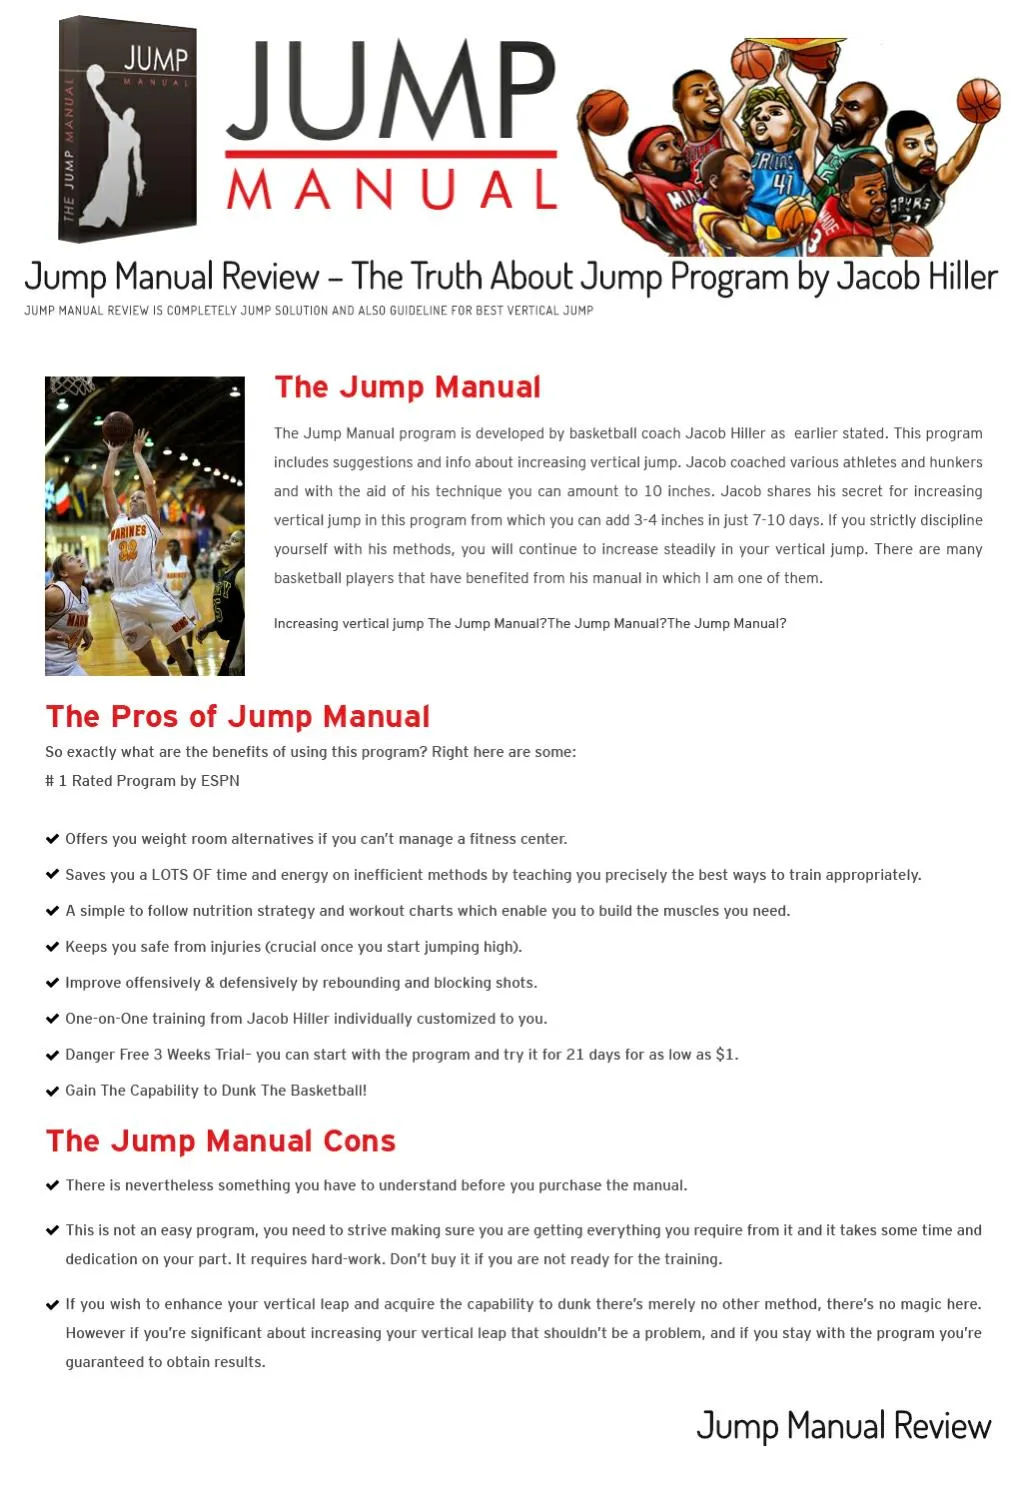 Jump Manual Workout Chart Free Download